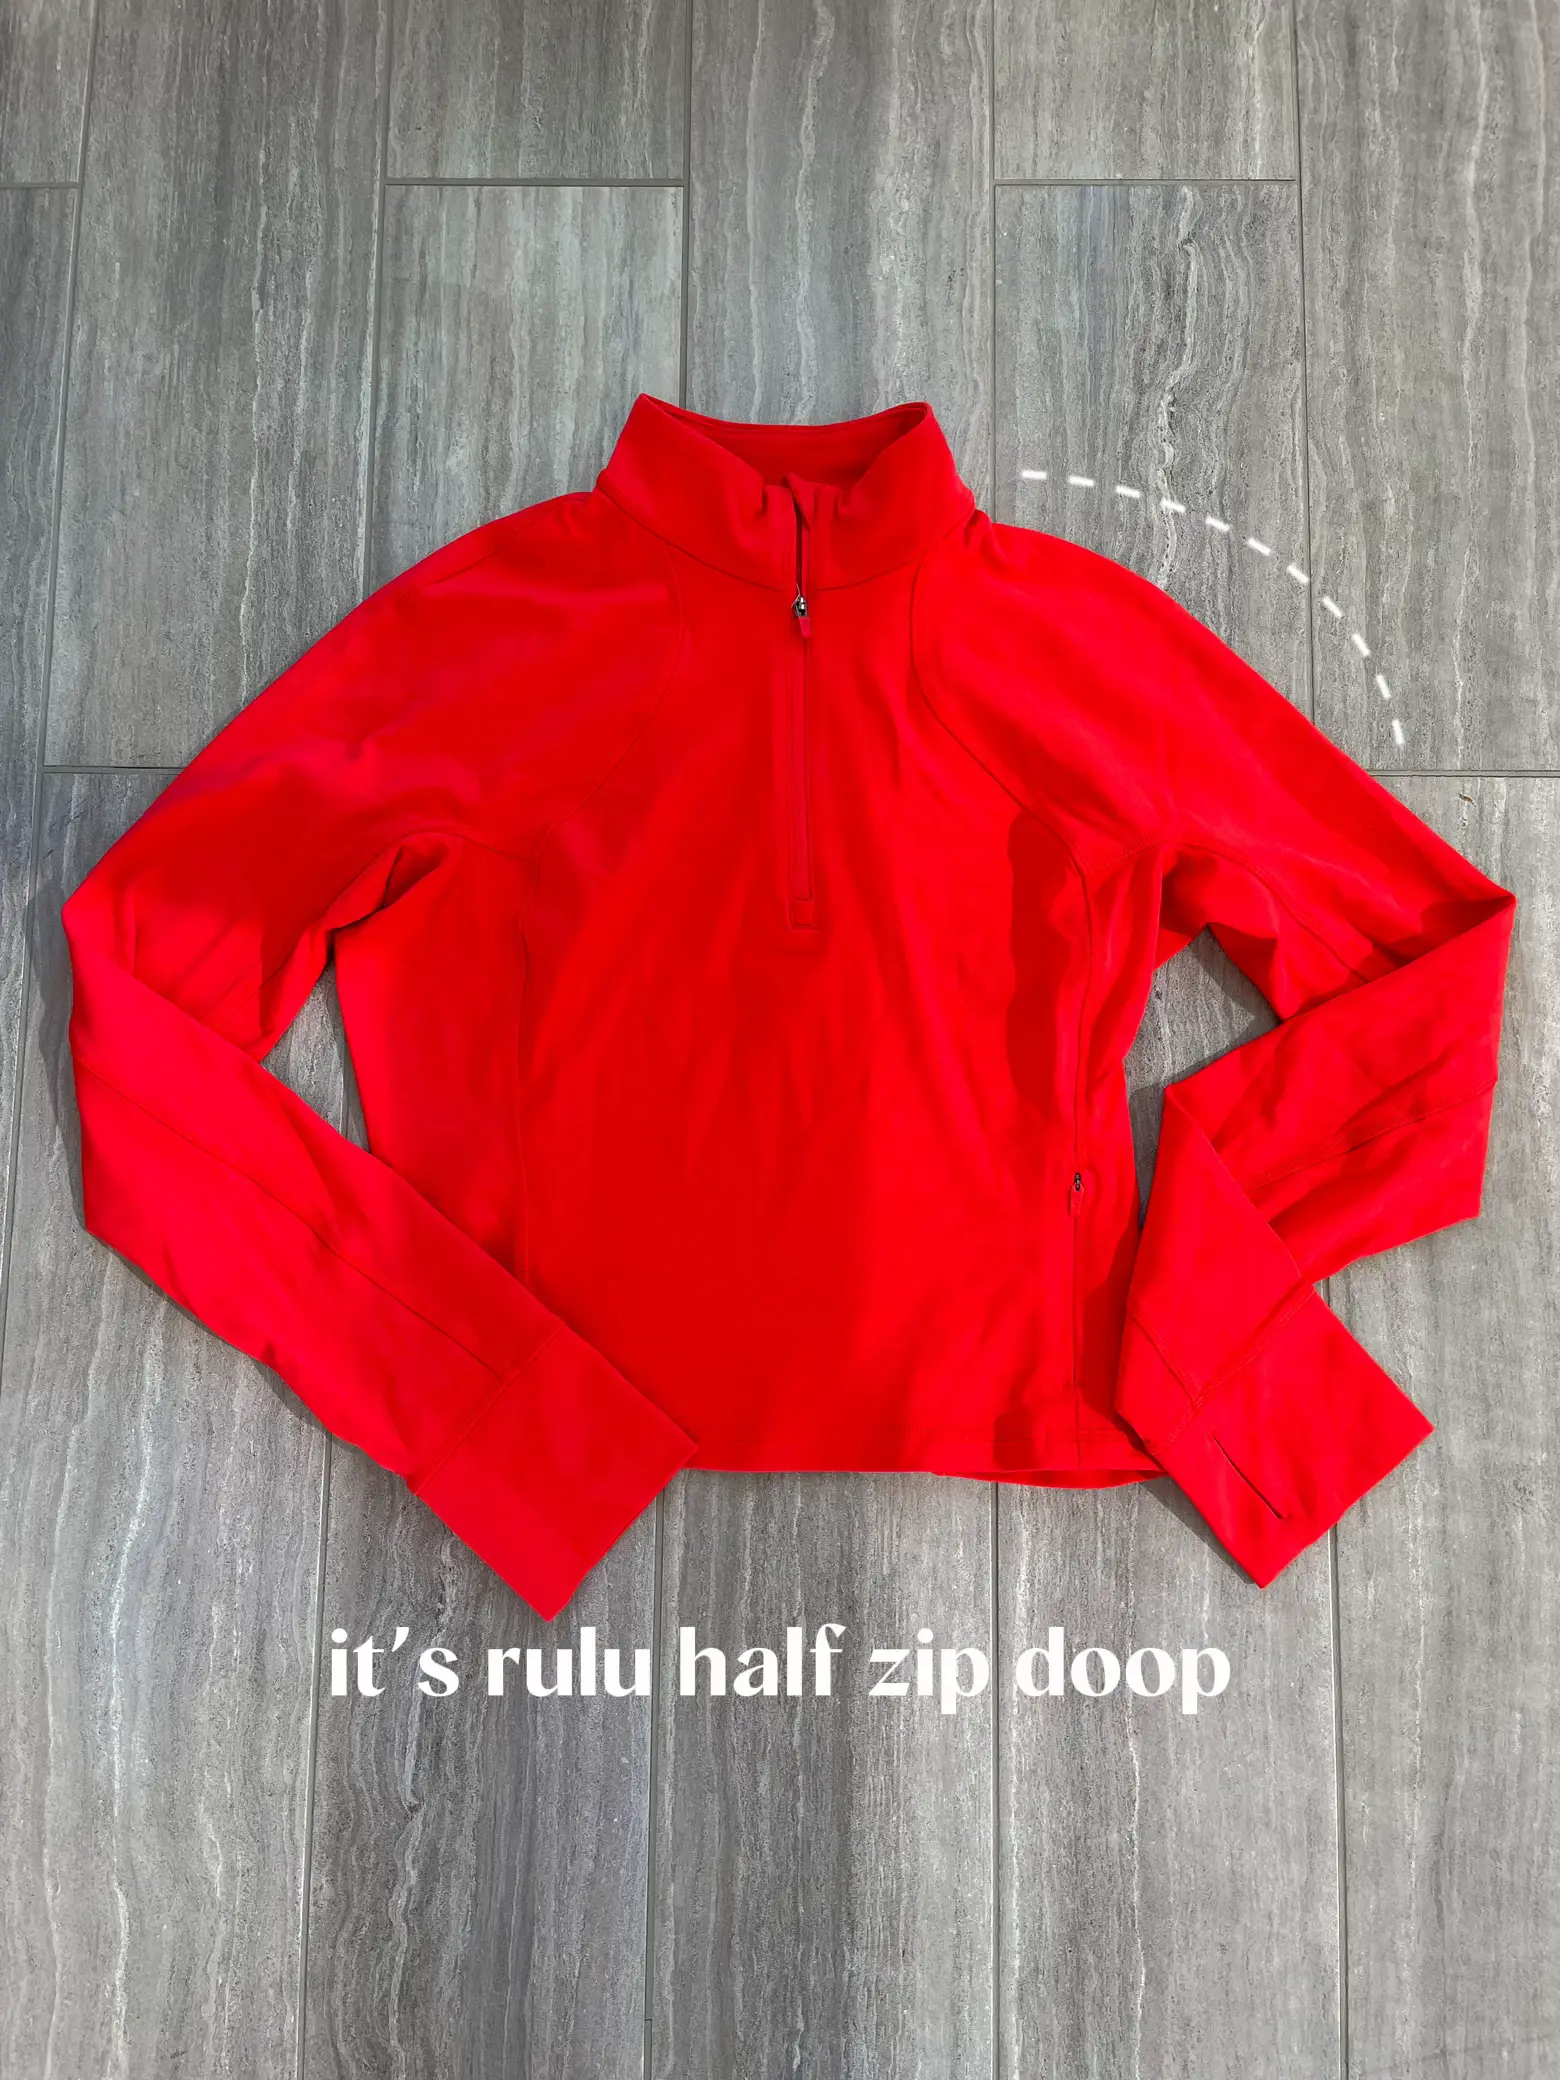 Lululemon Define Jacket Pink Size 4 - $76 (35% Off Retail) - From kayla